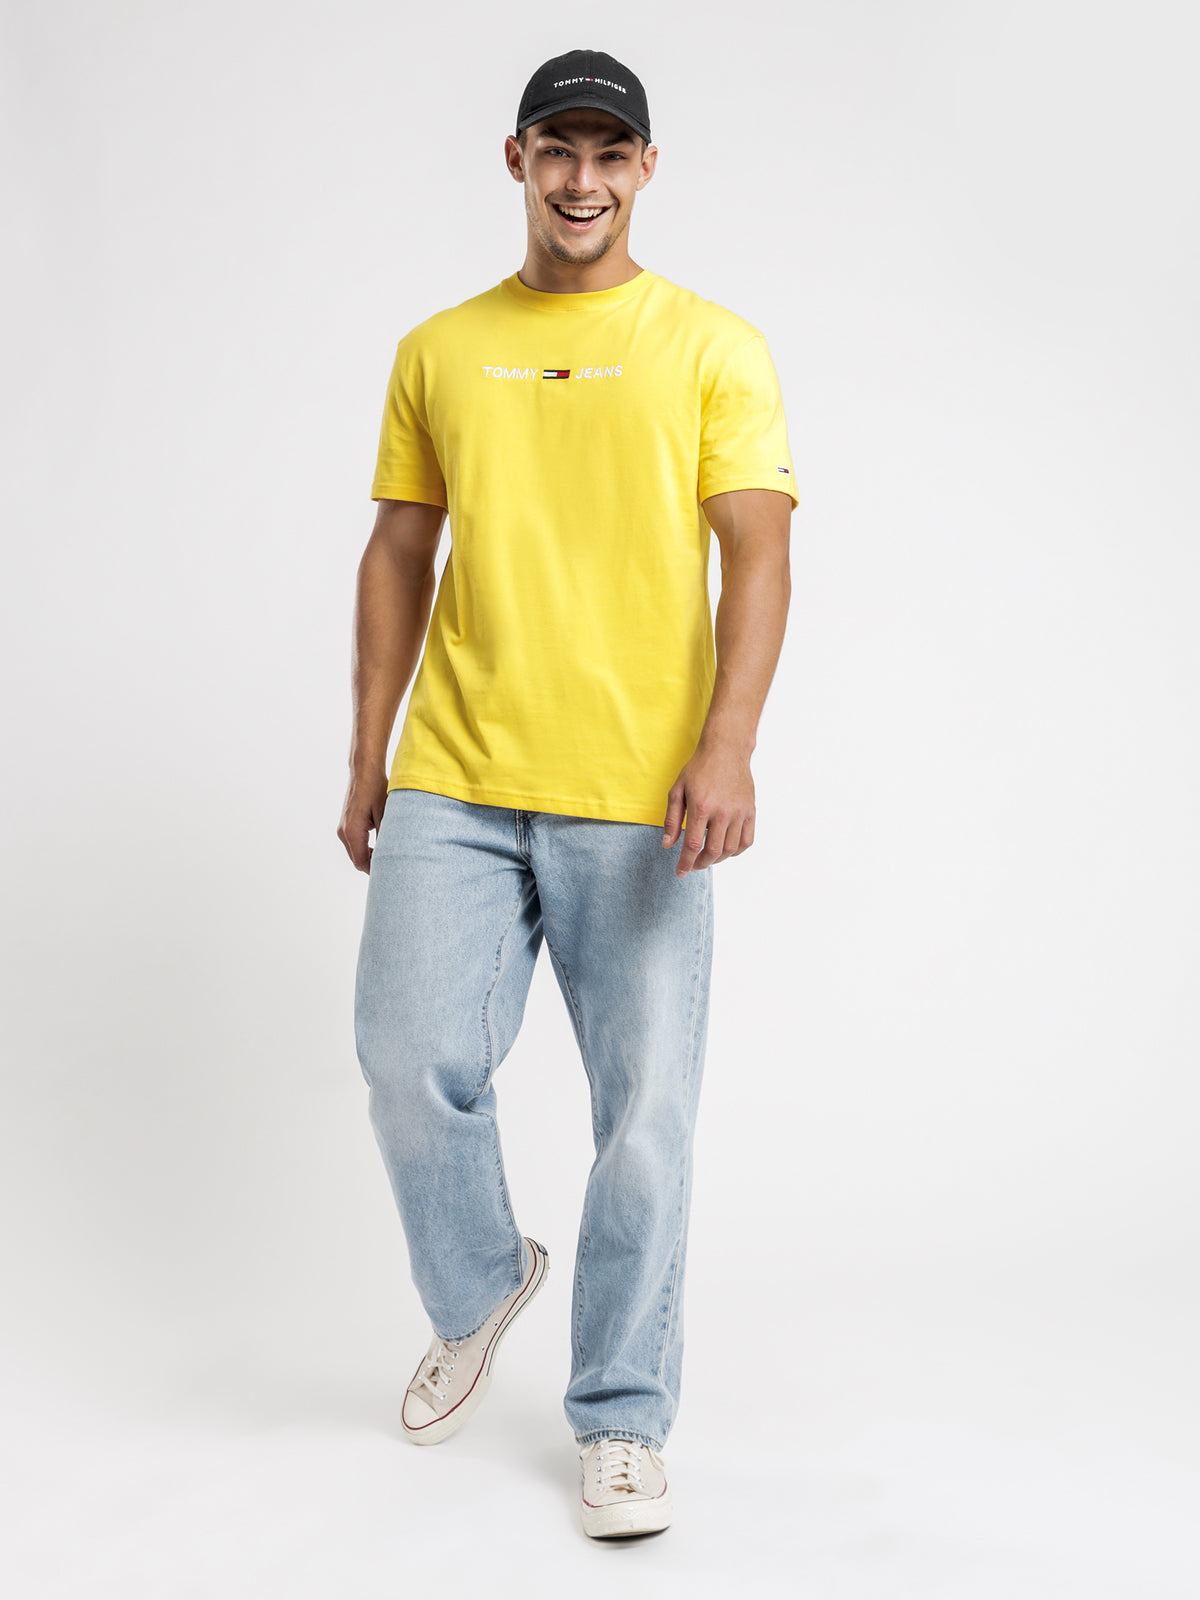 Straight Logo T-Shirt in Star Fruit Yellow